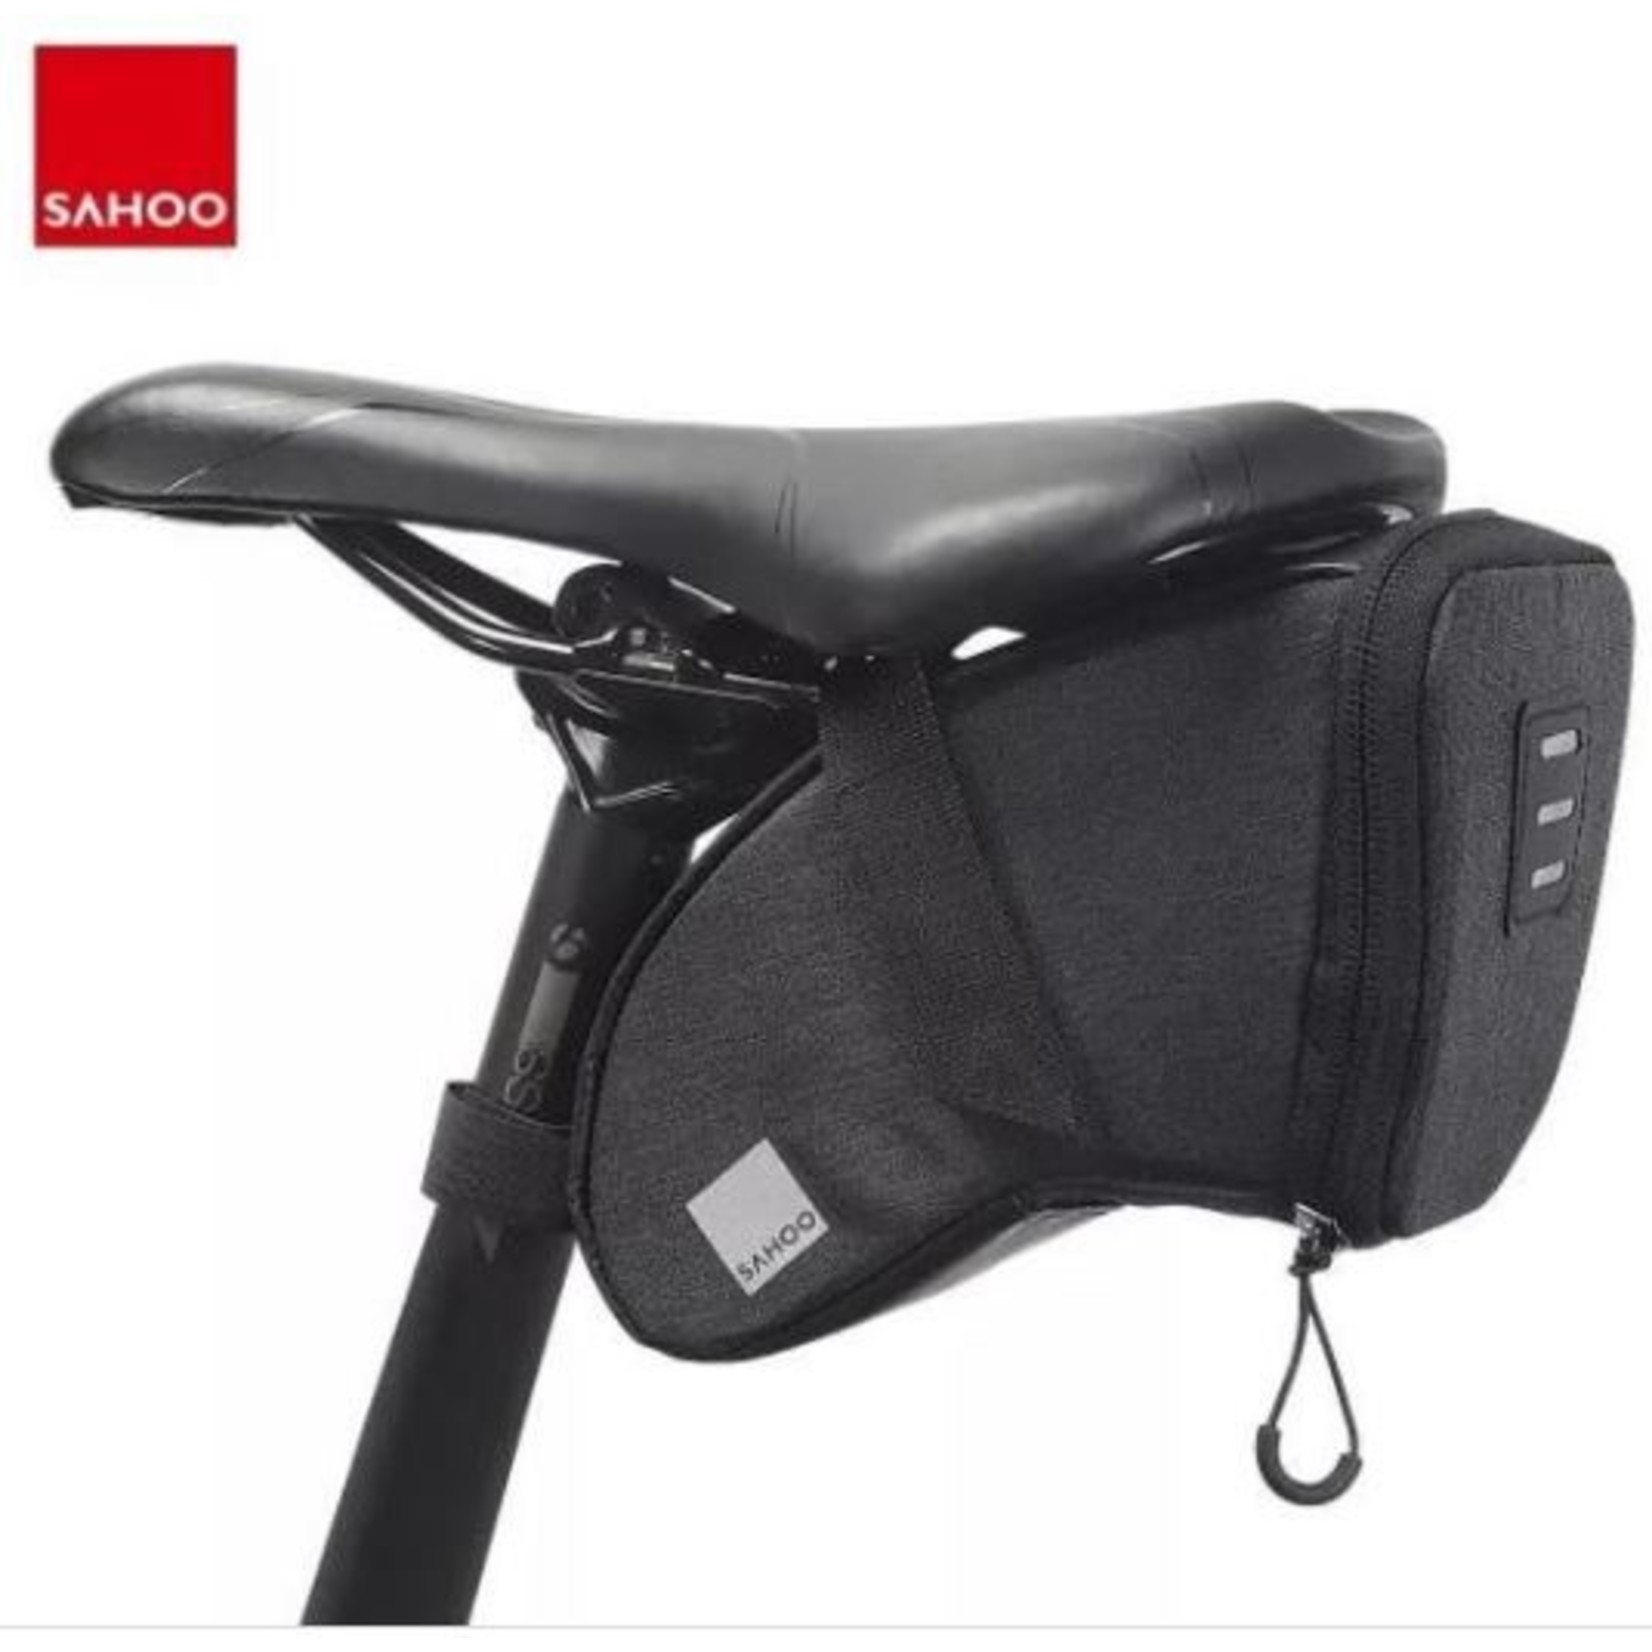 sahoo Sahoo Bike Cycling Saddle Bag - Size - 17.5 X 9 X 8.5Cm - Capacity - 1L